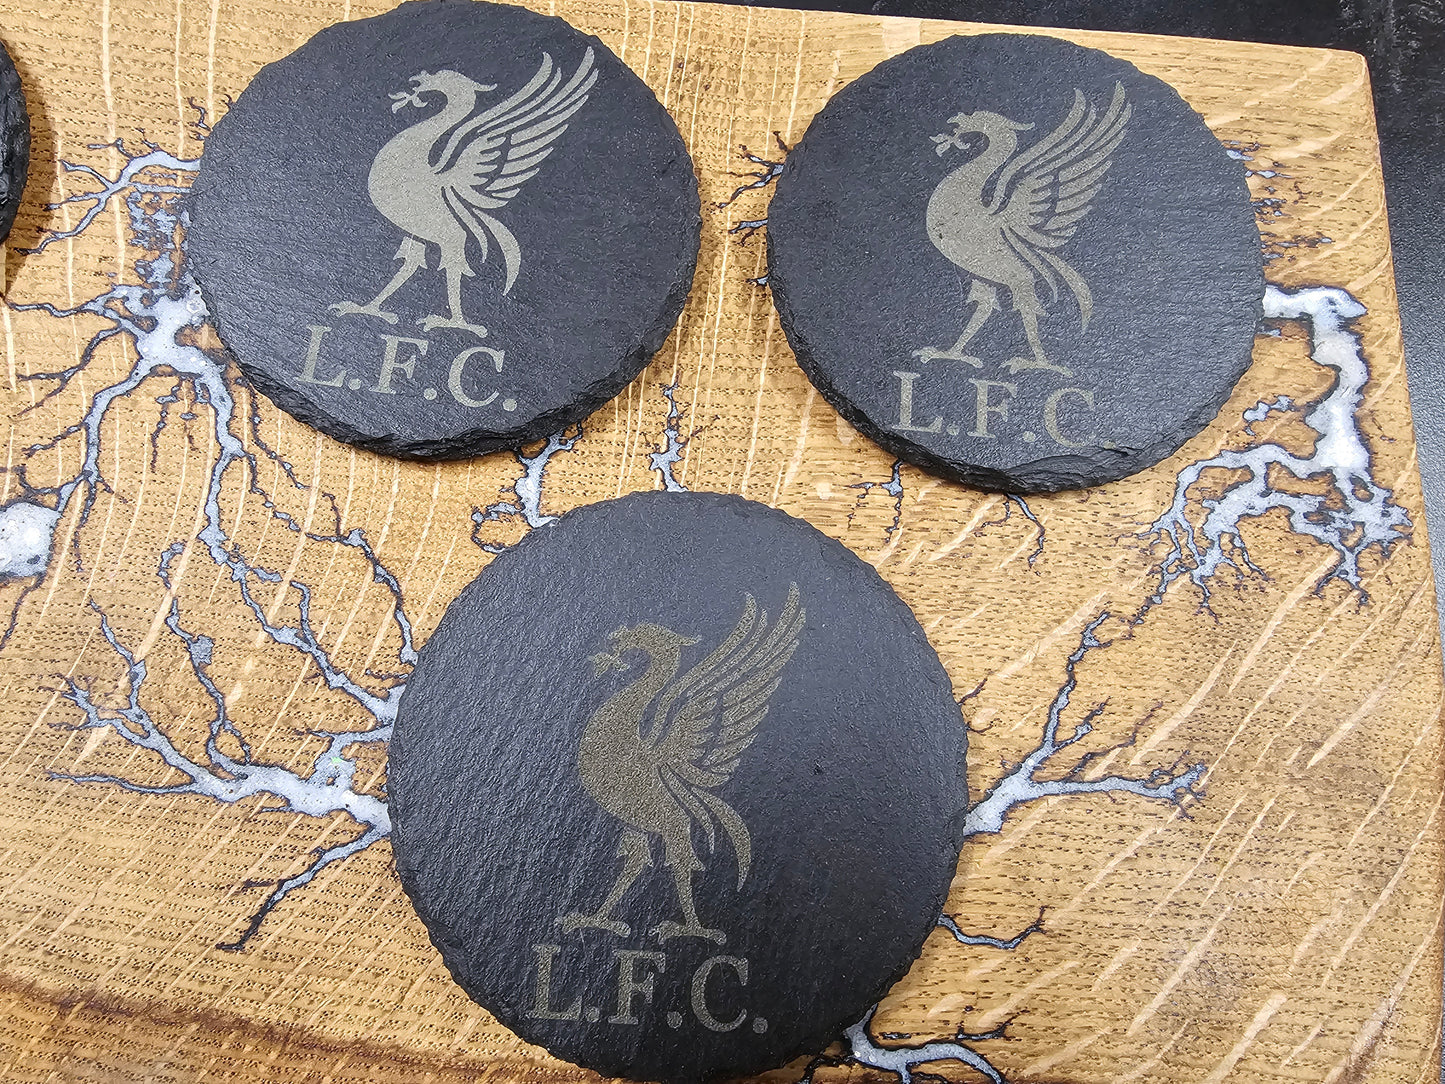 Slate Football/Emblem Coasters